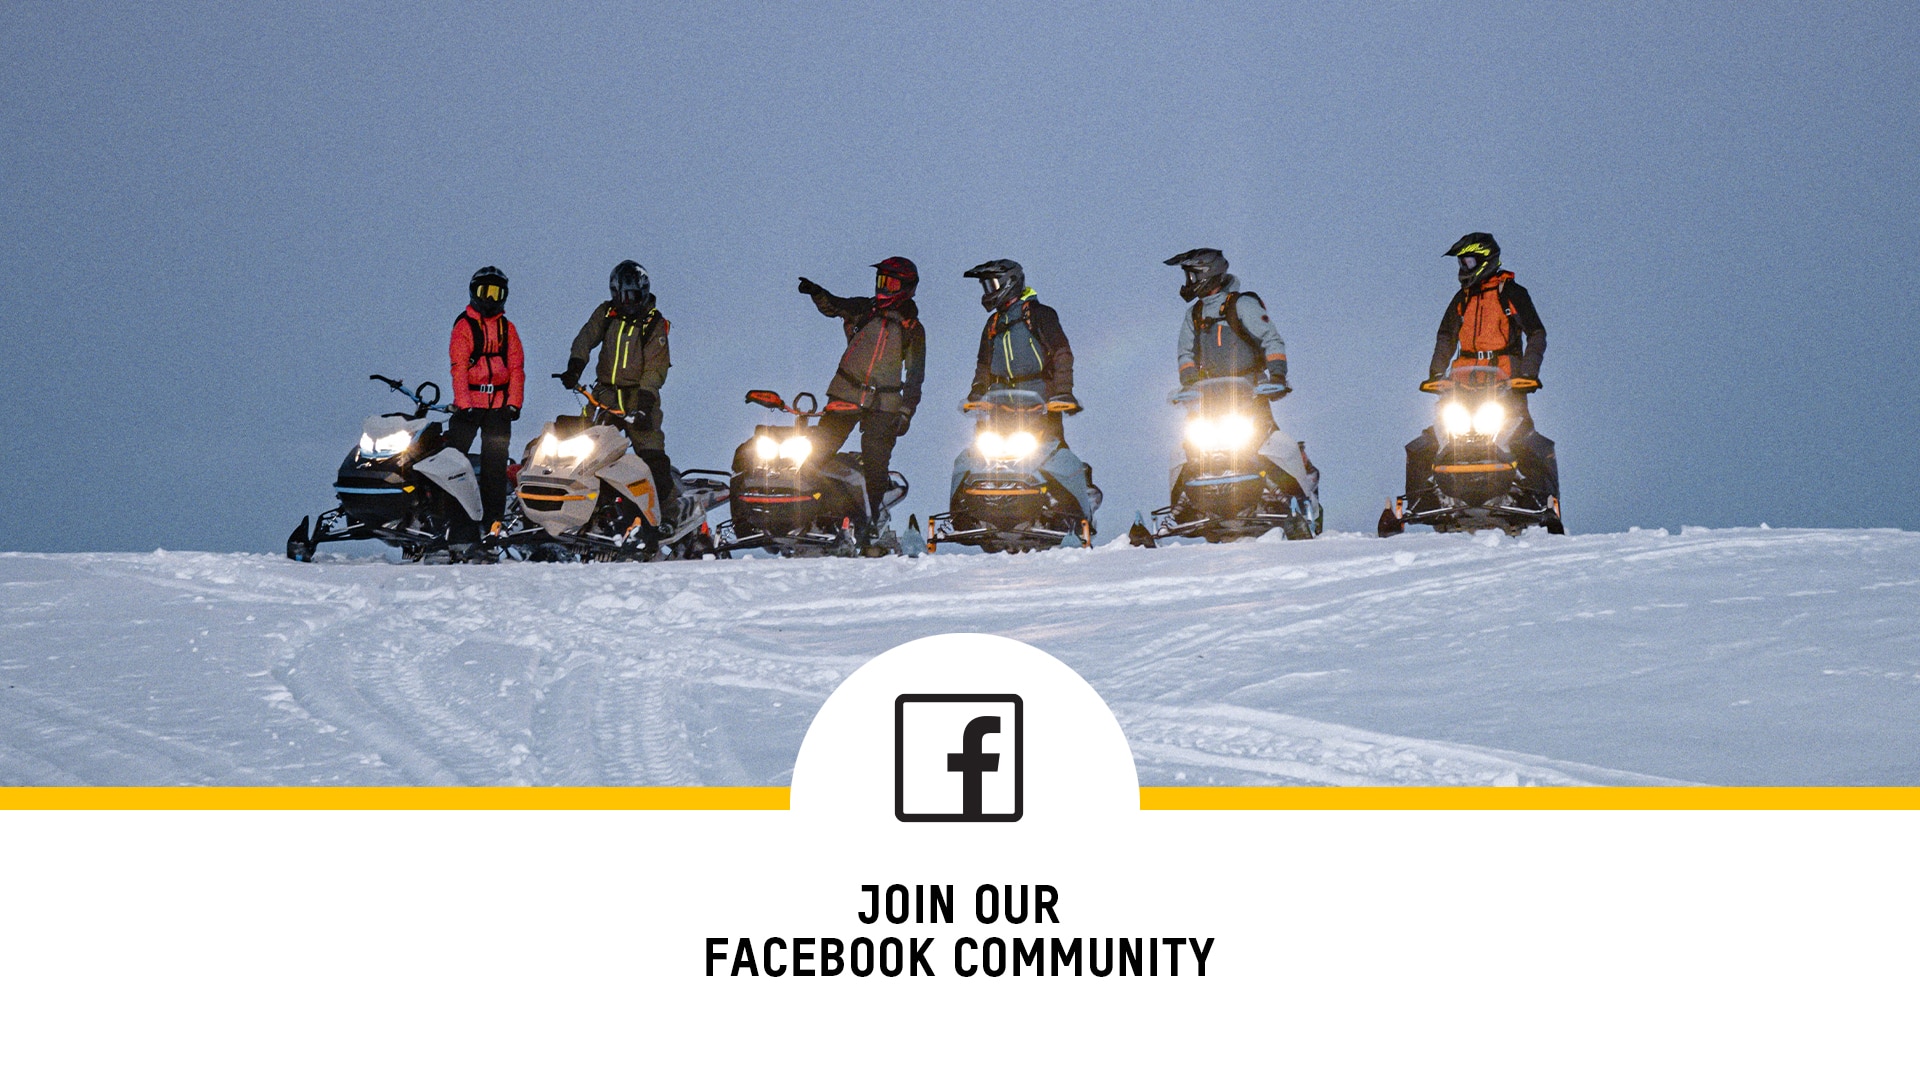 Ski-Doo Facebook Community